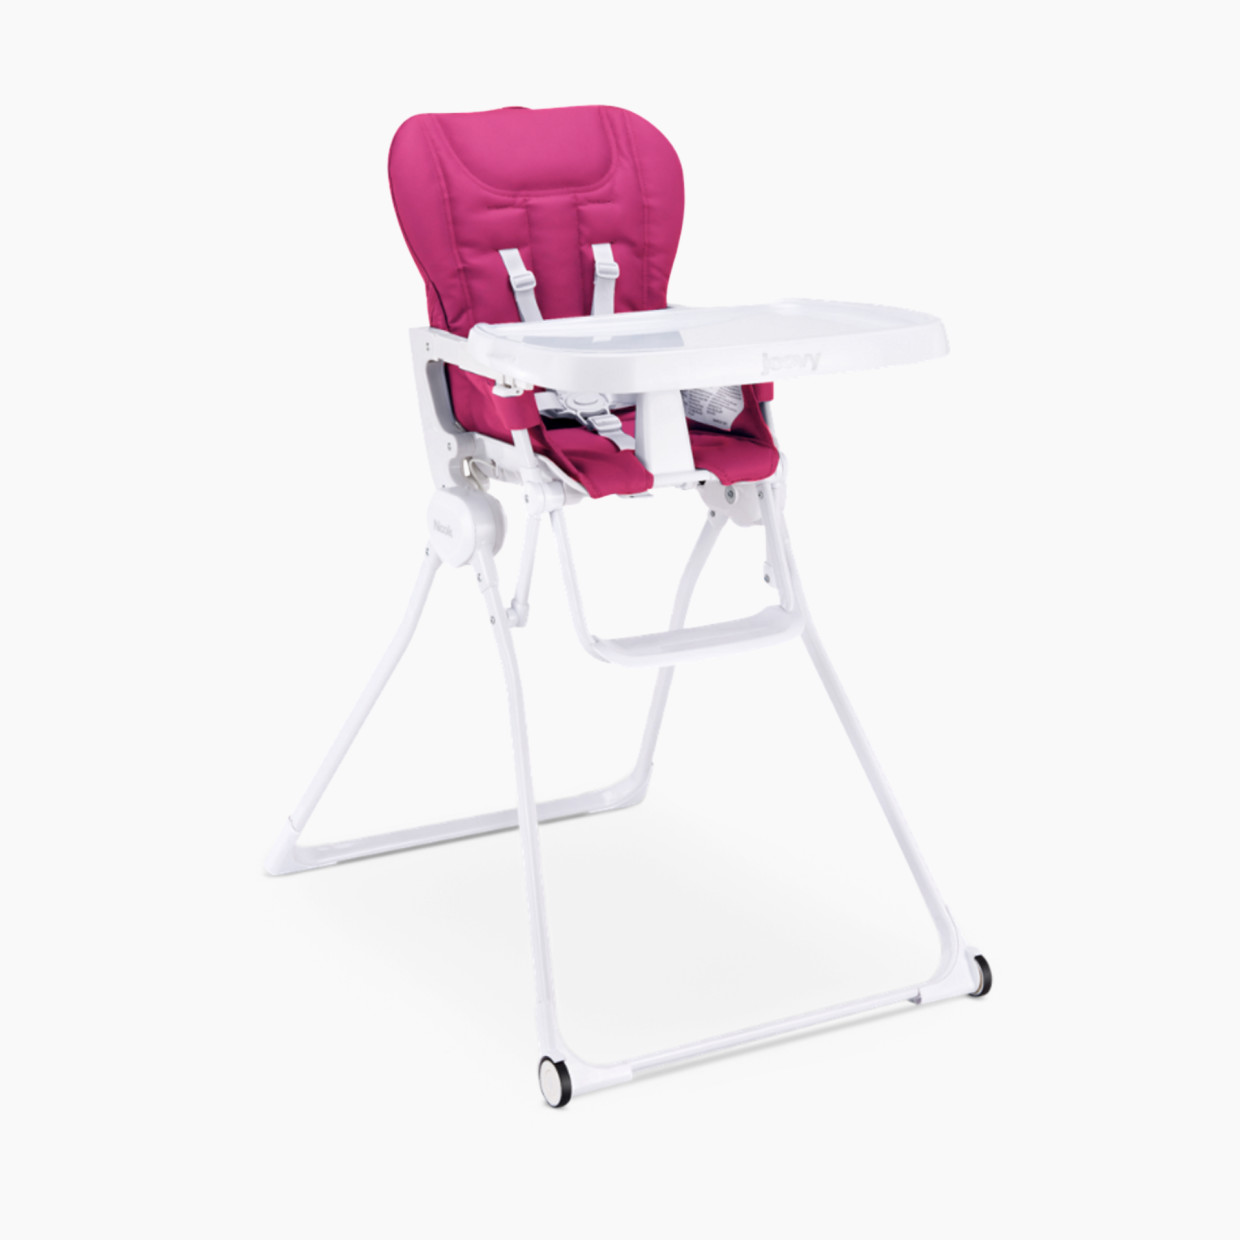 Joovy Nook Newborn High Chair - Pink Crush.